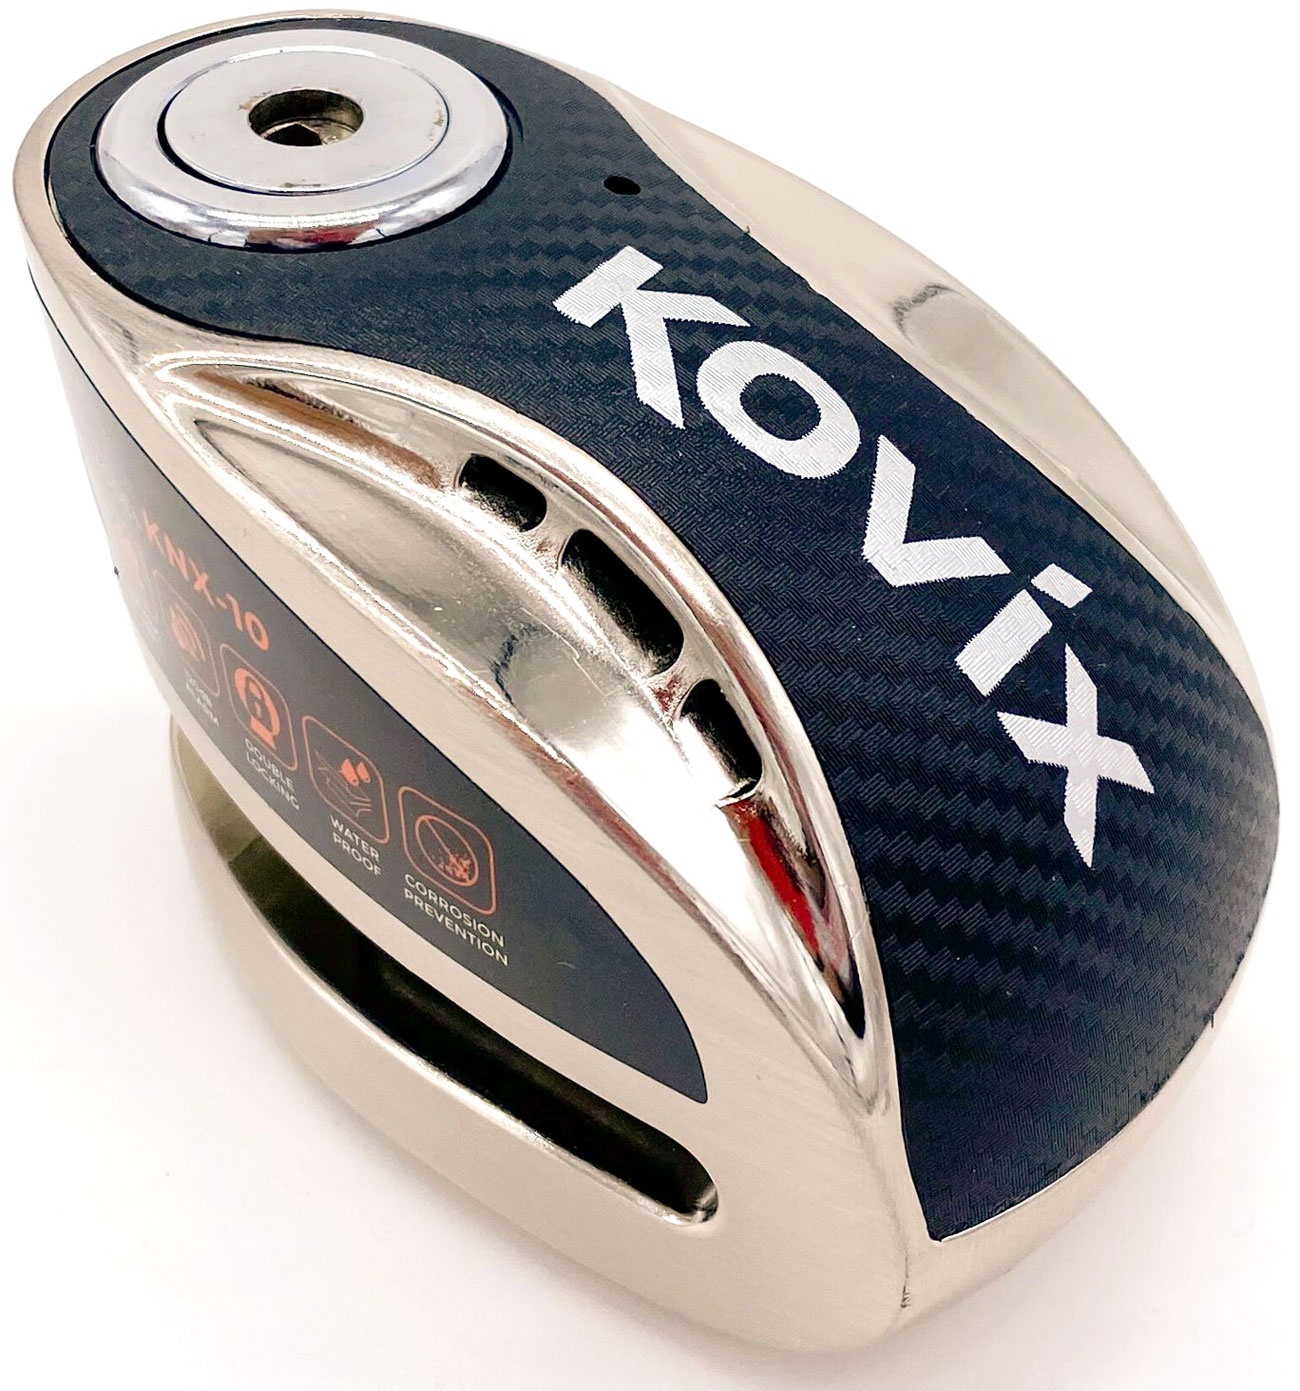 Kovix KNX10, alarme frein-disque - Argent/Noir